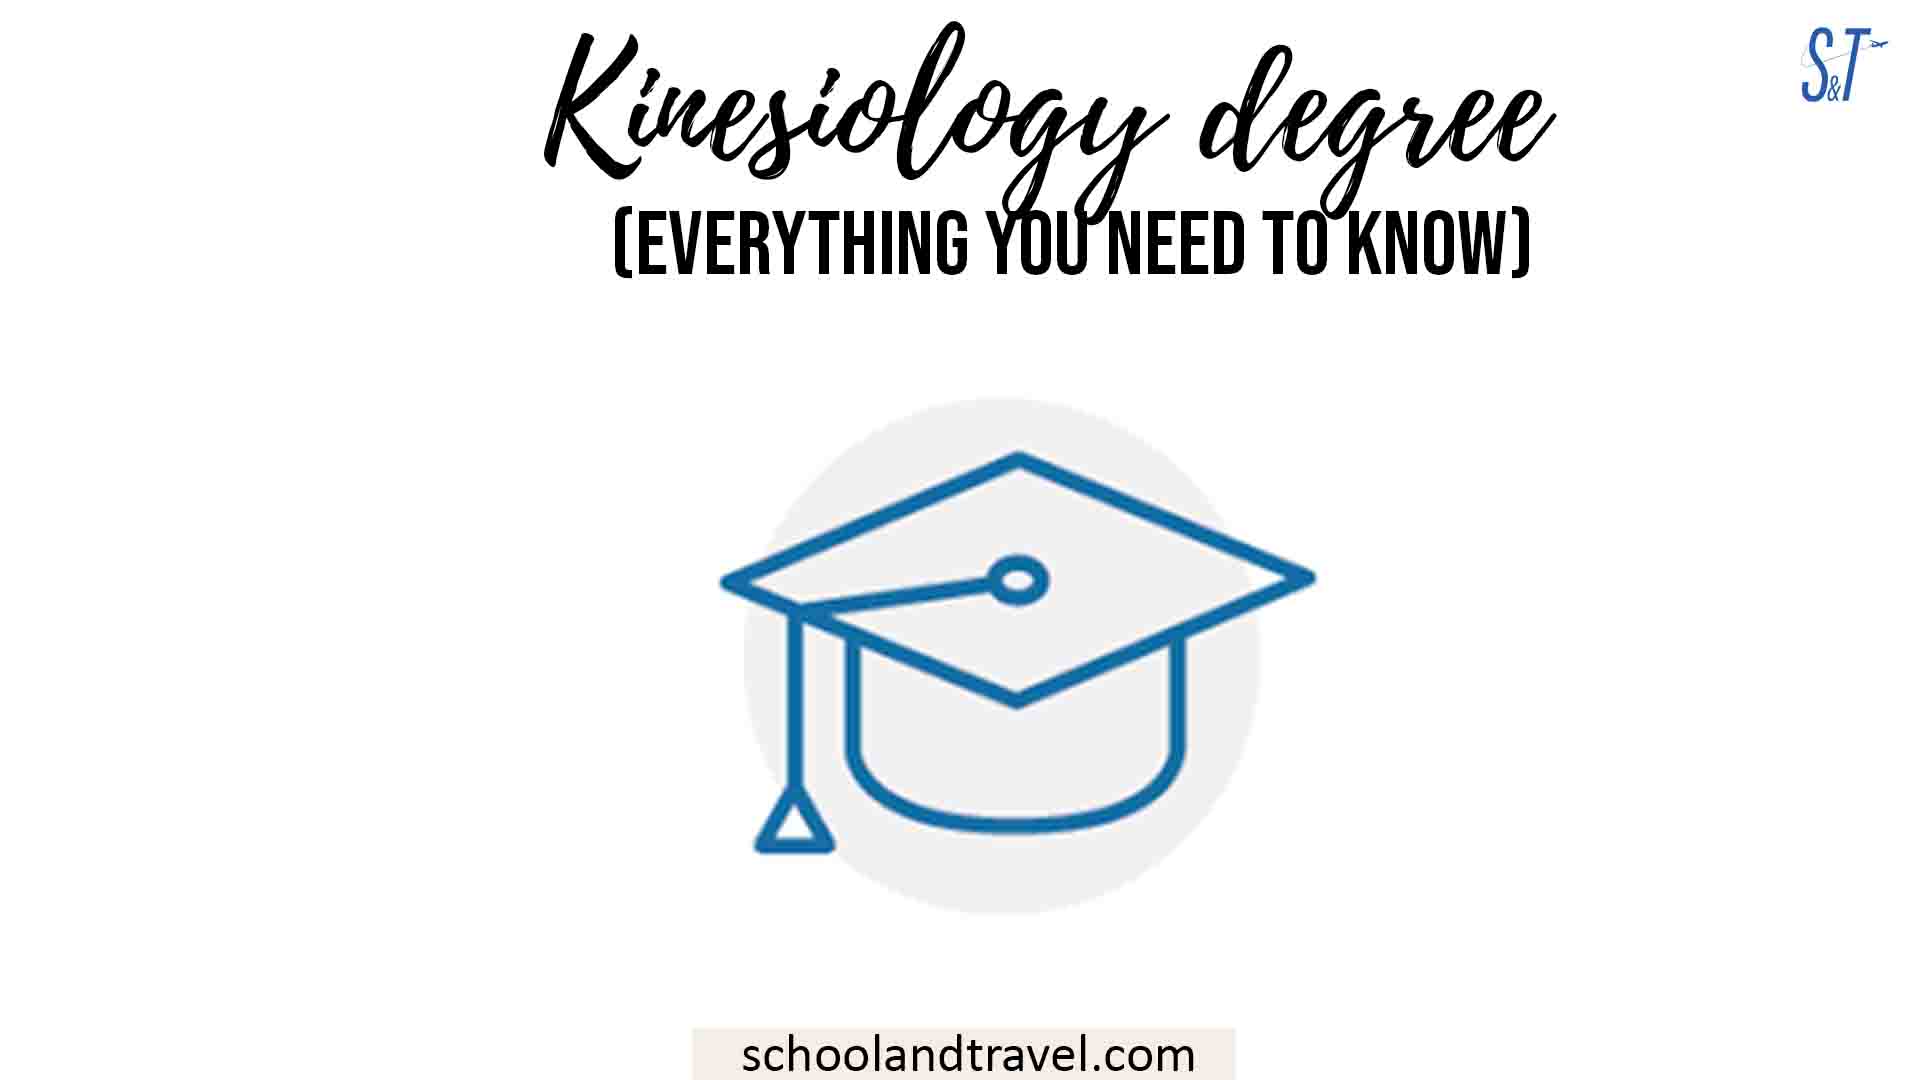 Kinesiology degree